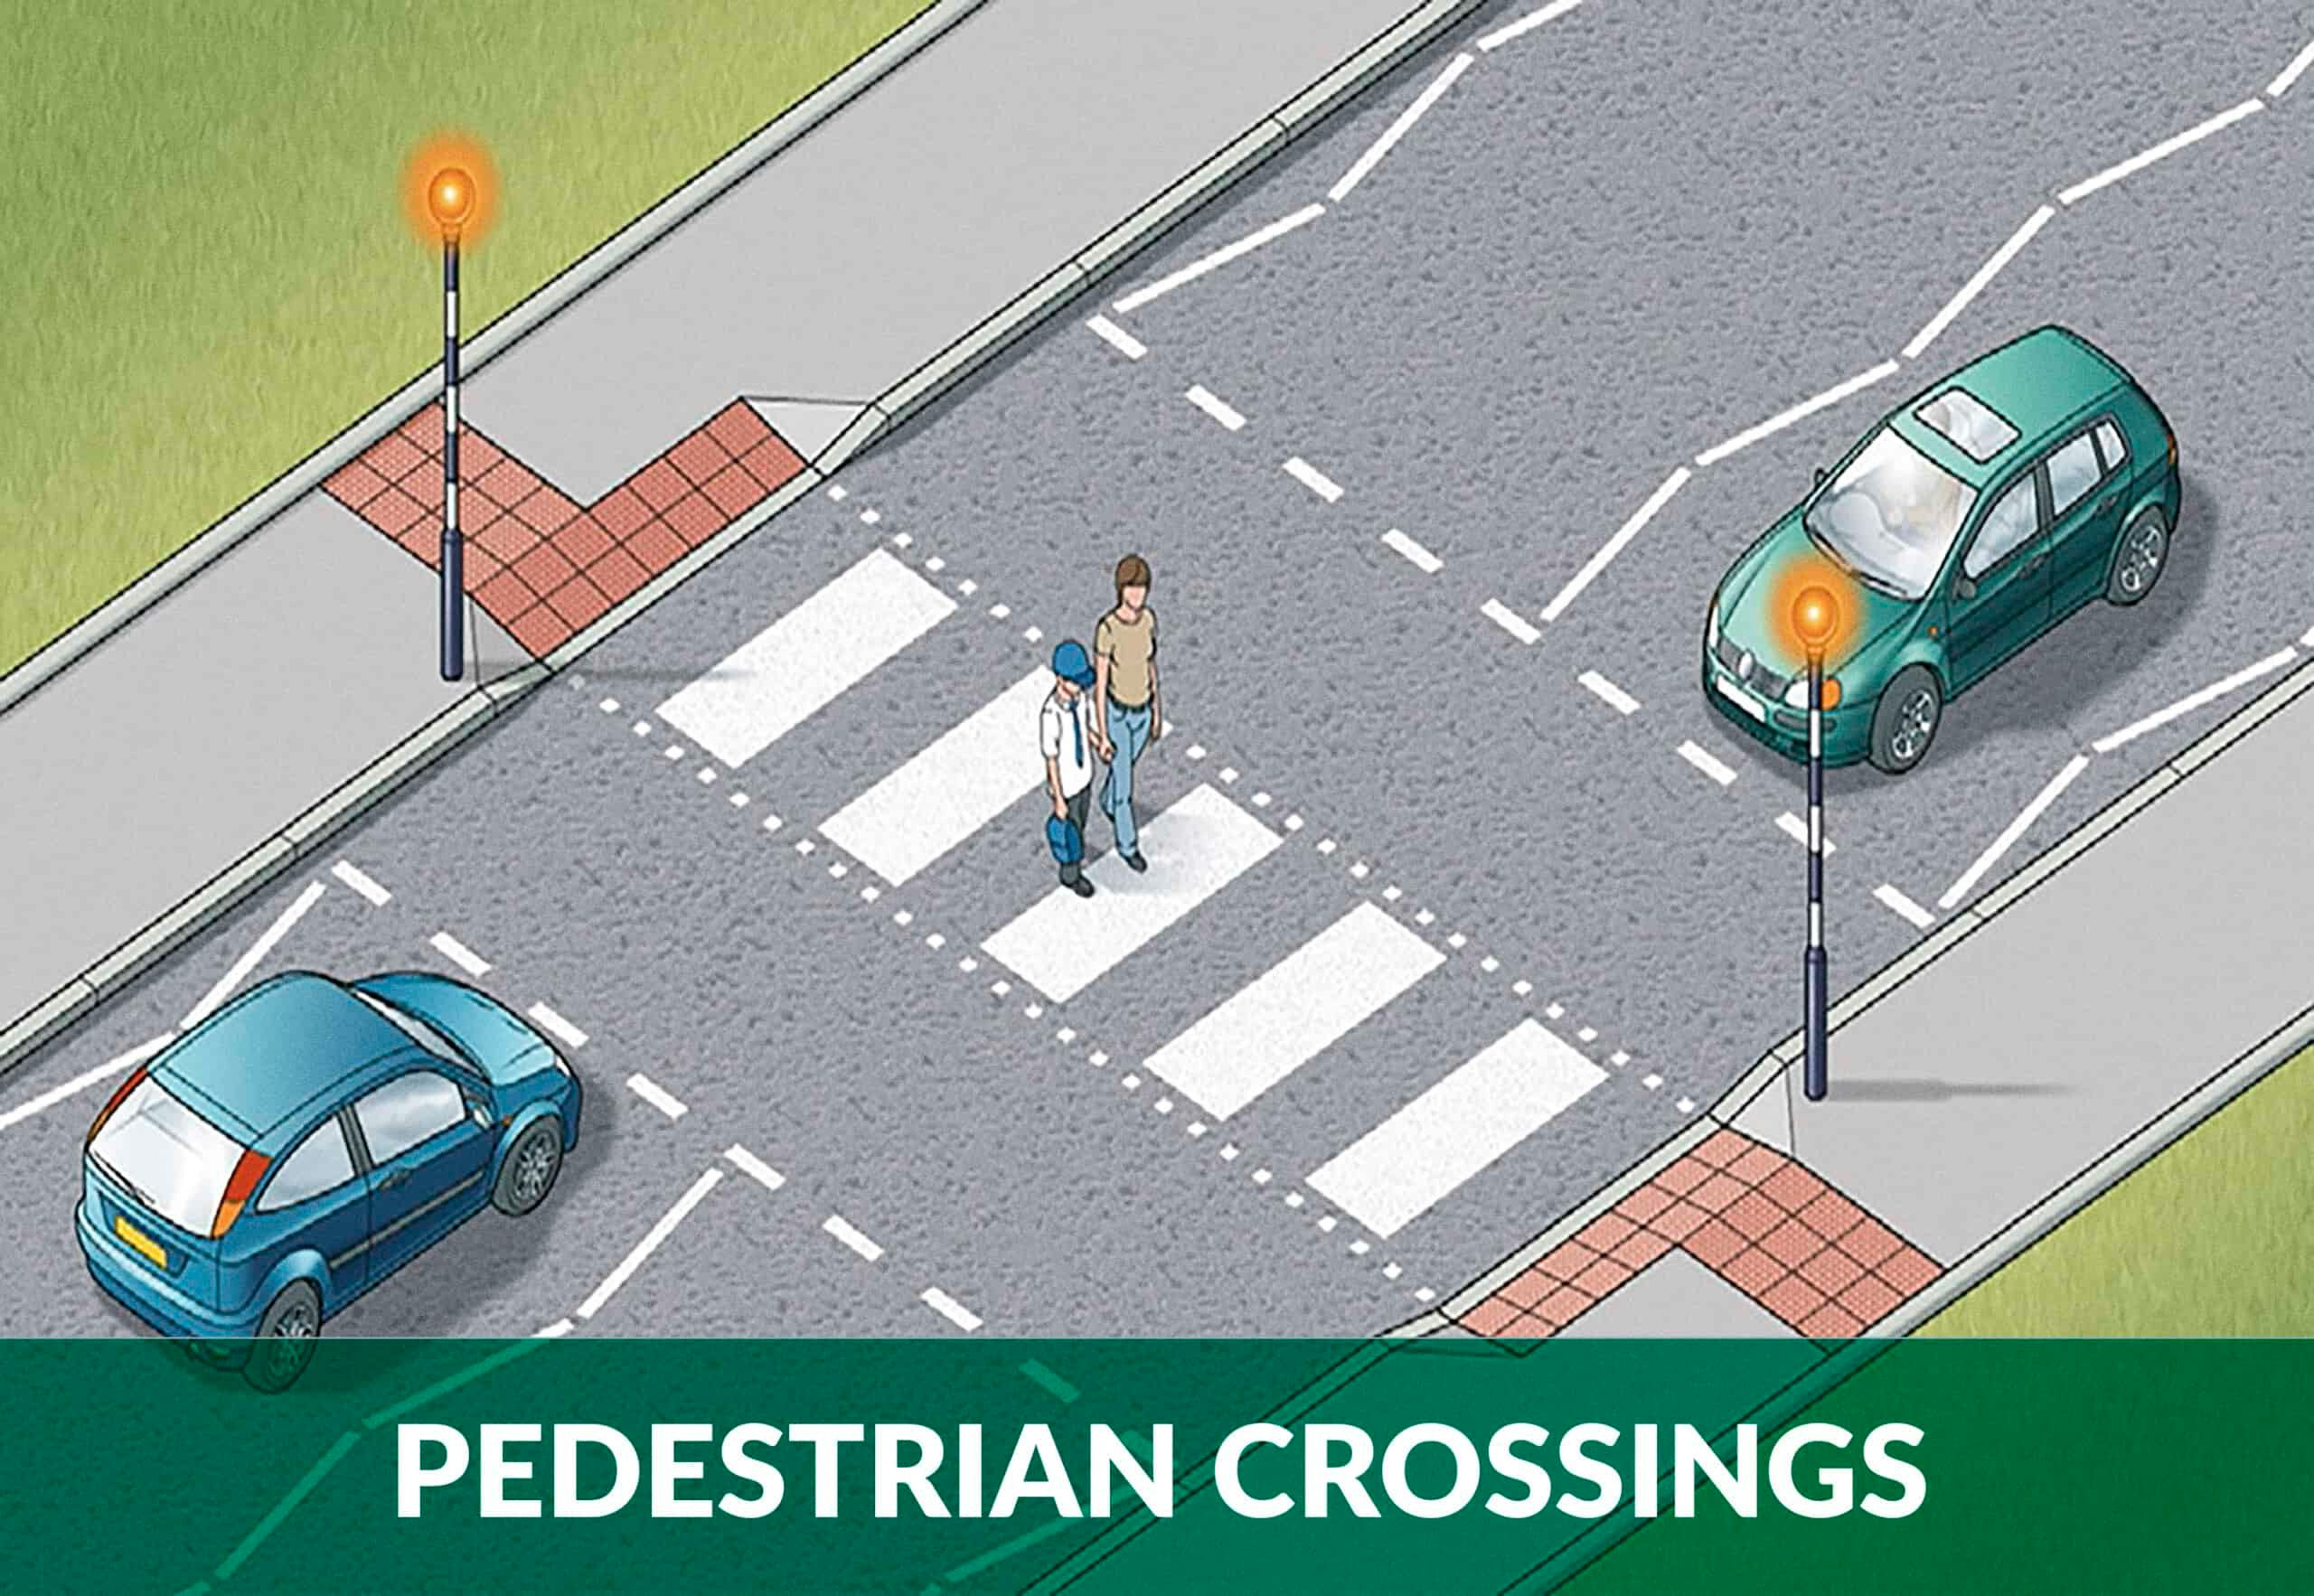 Road crossings explained - zebra, pelican, puffin and toucan crossings